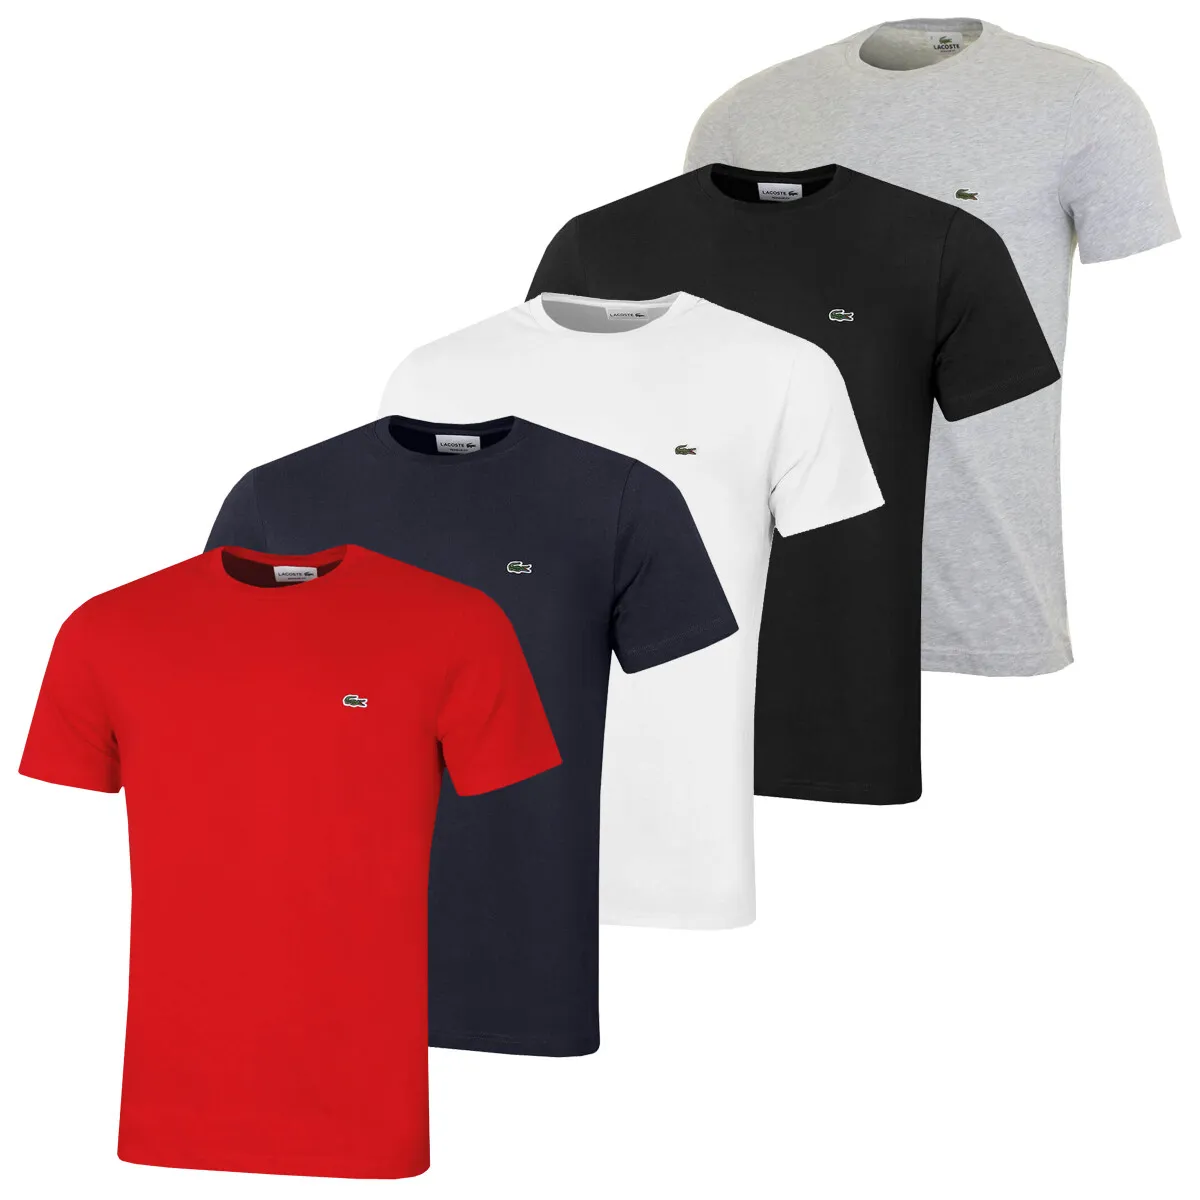 Lacoste Mens TH2038 Plain Cotton Crew Short Sleeve T-Shirt 25% OFF RRP